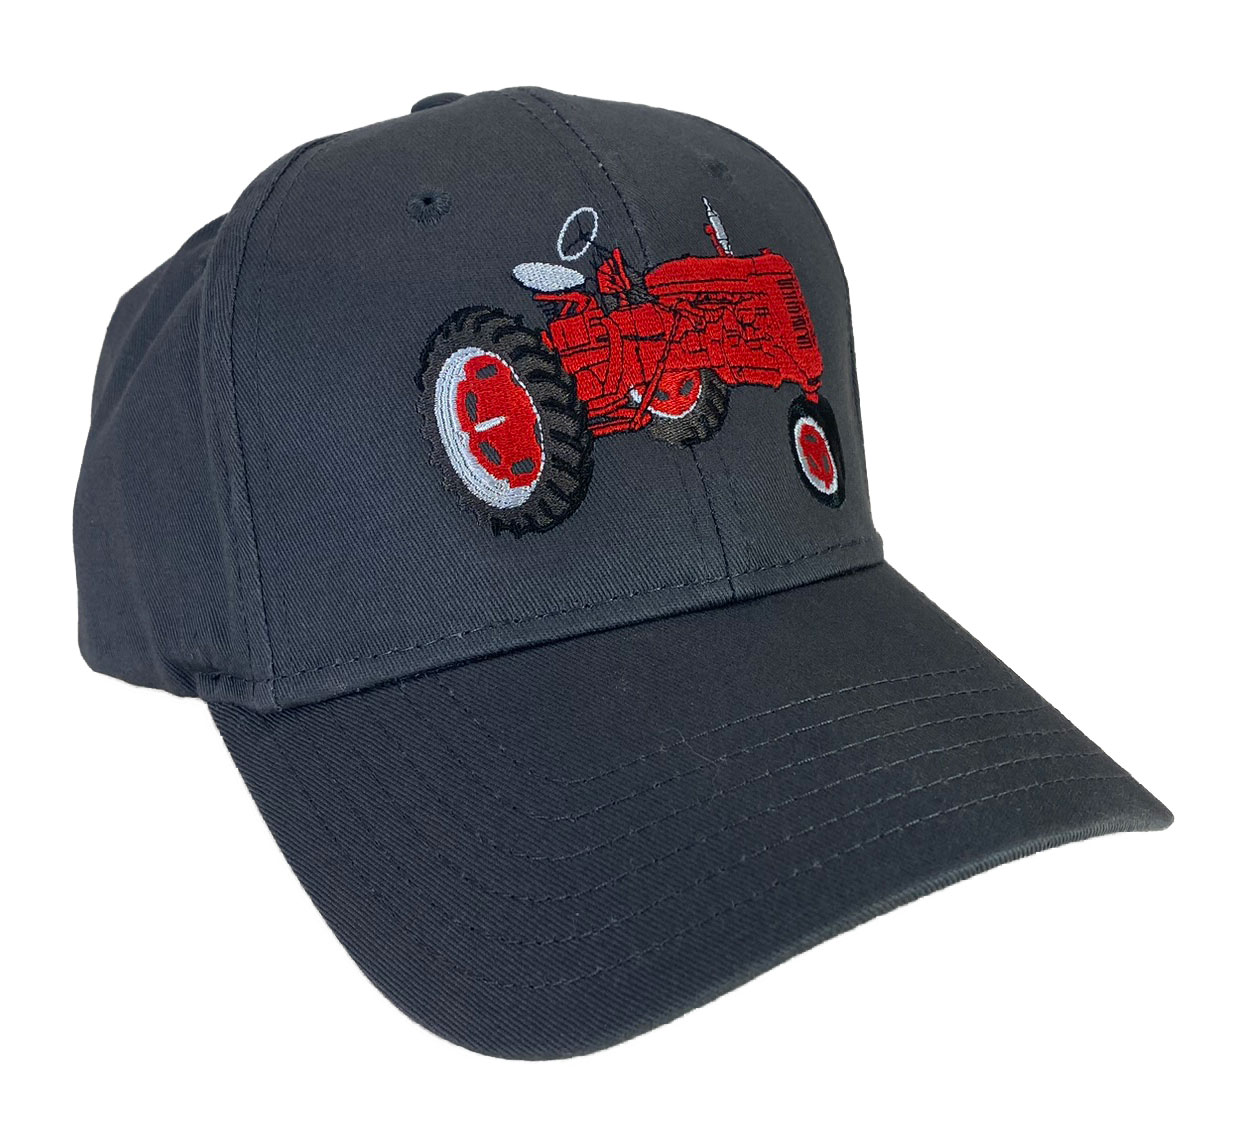 Tractor Cap - McCormick #44-8000CGV Red Hat Logos Embroidered Locomotive Farmall International